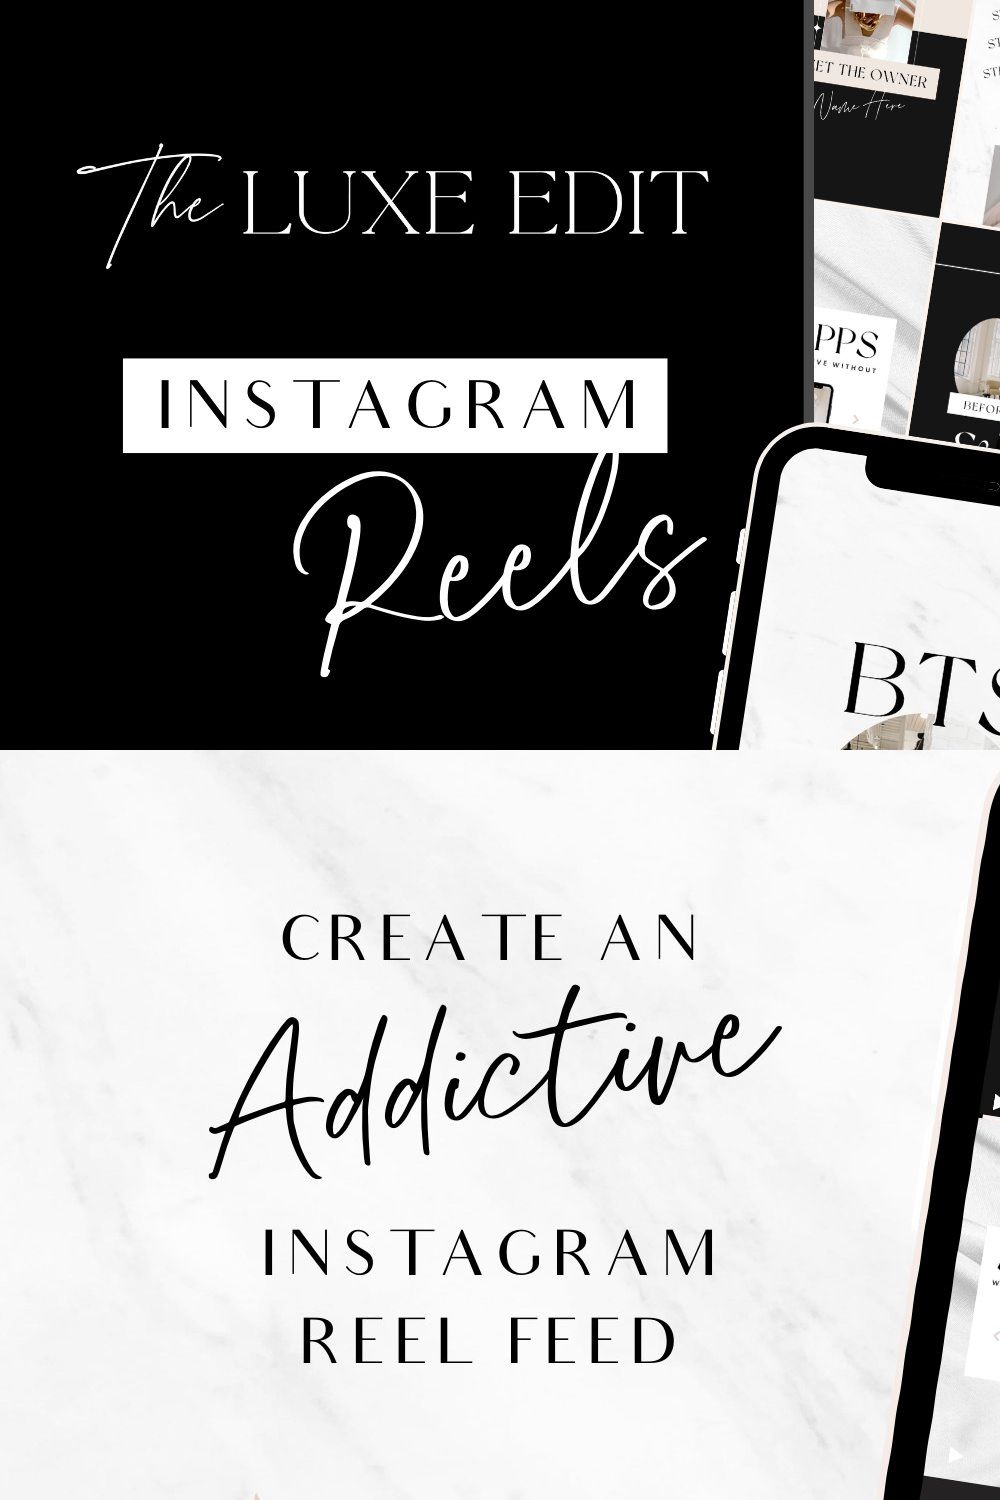 Instagram Reels - Luxe Edit pinterest preview image.